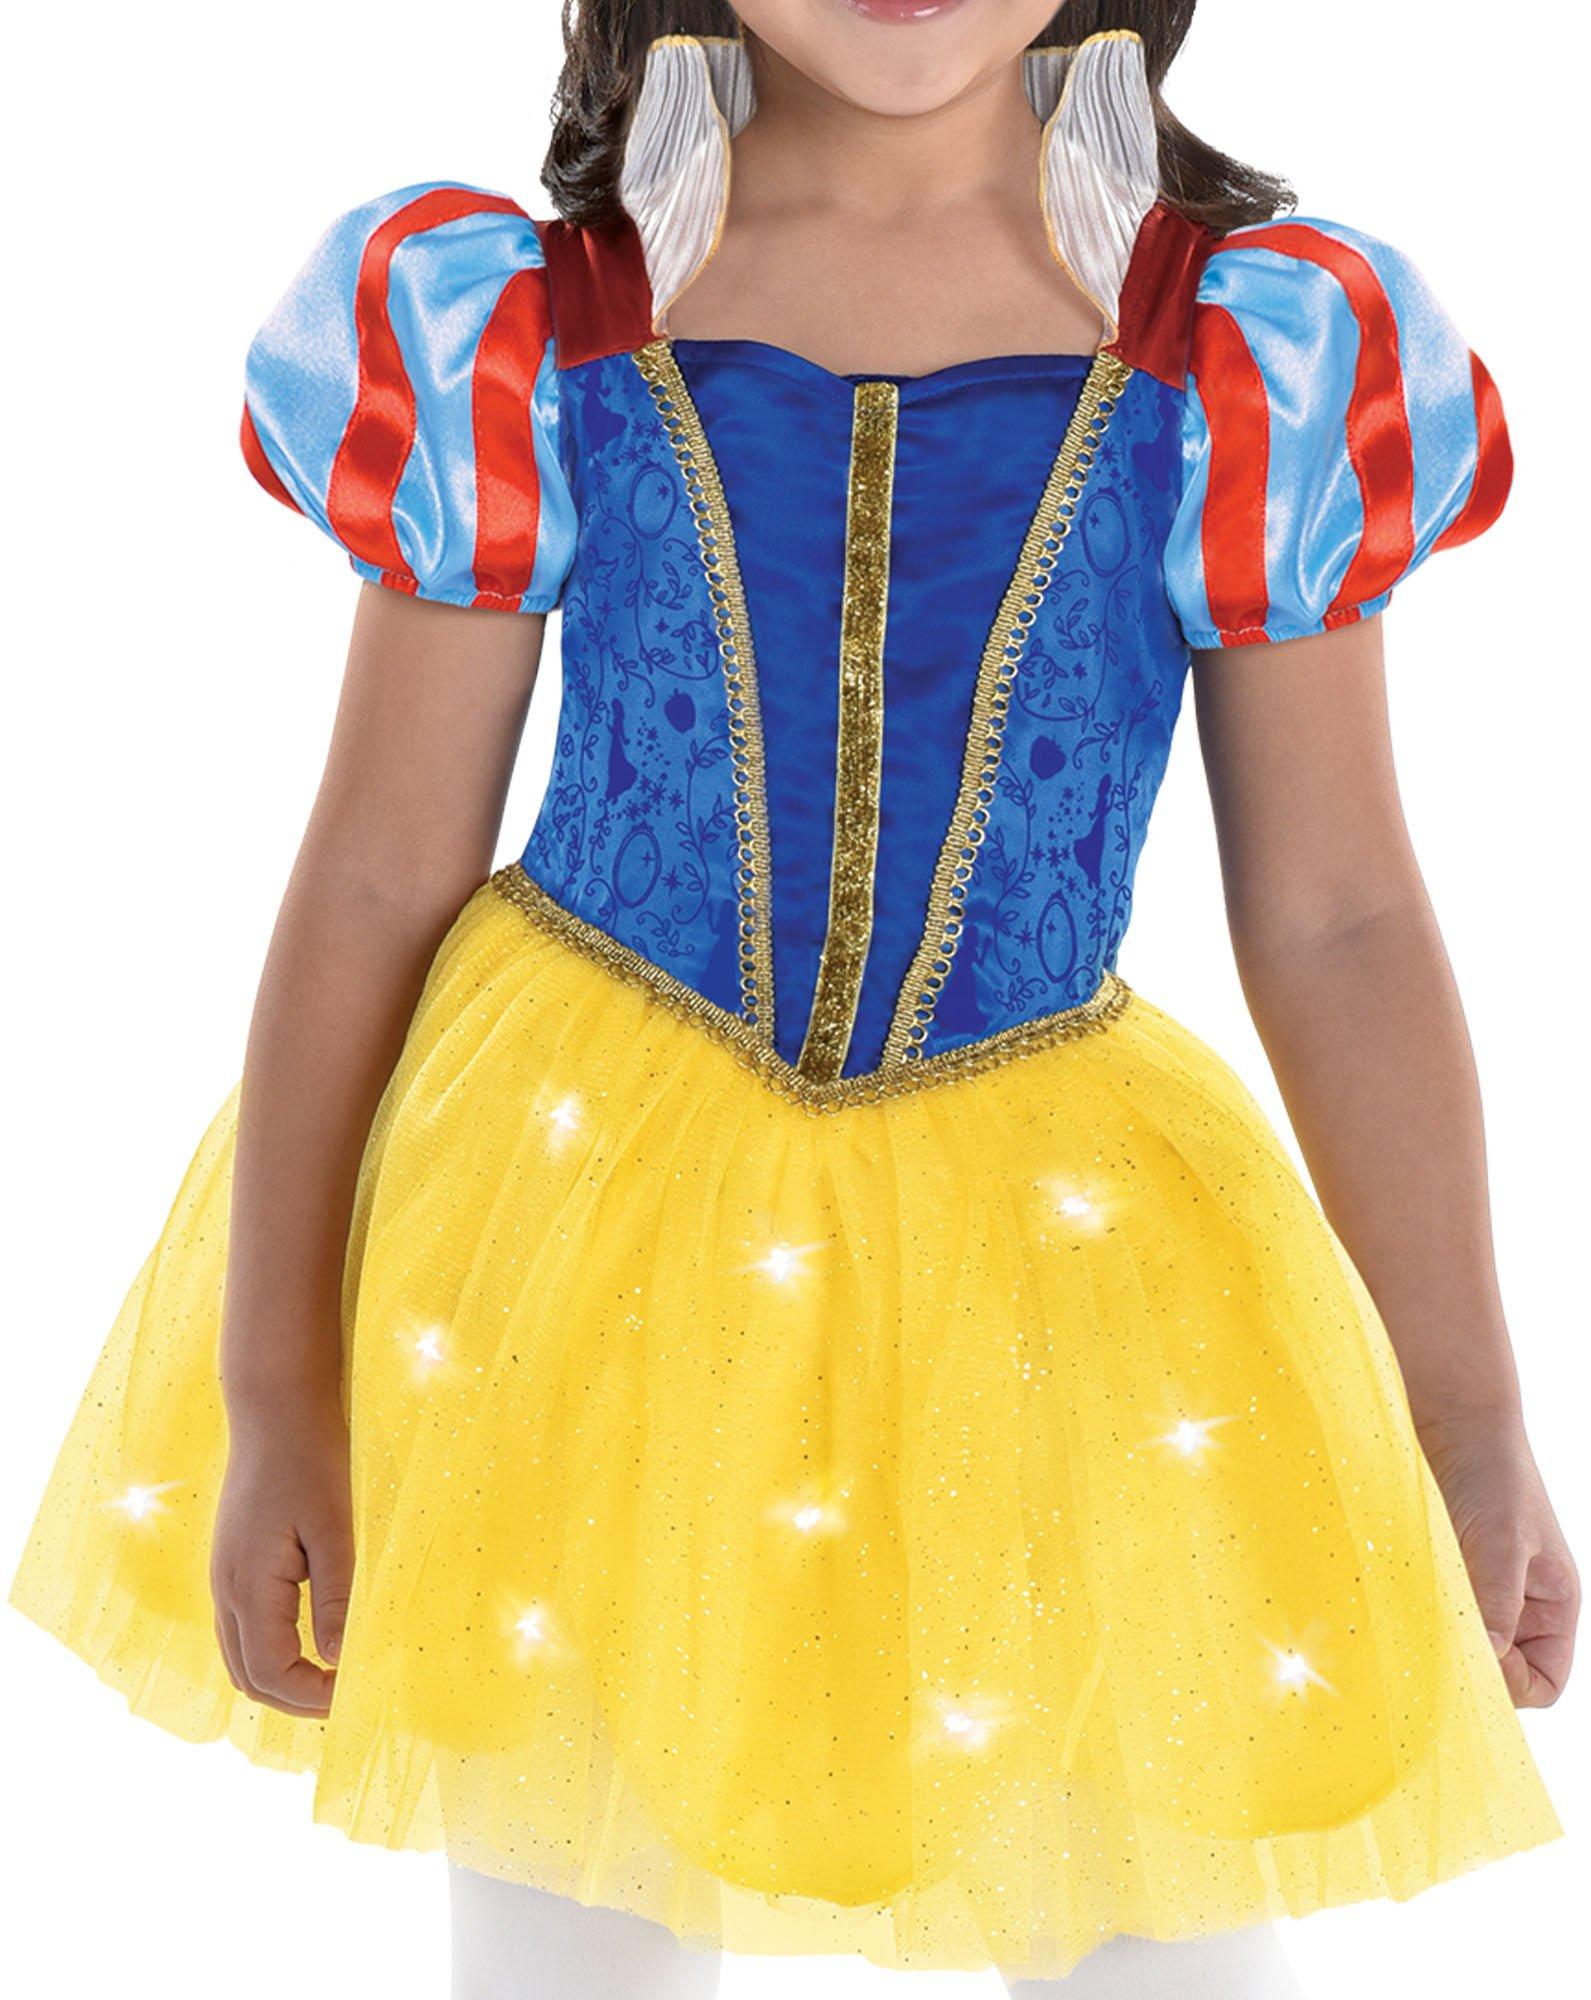 Kids' Light-Up Snow White Costume - Disney Snow White & The Seven Dwarfs